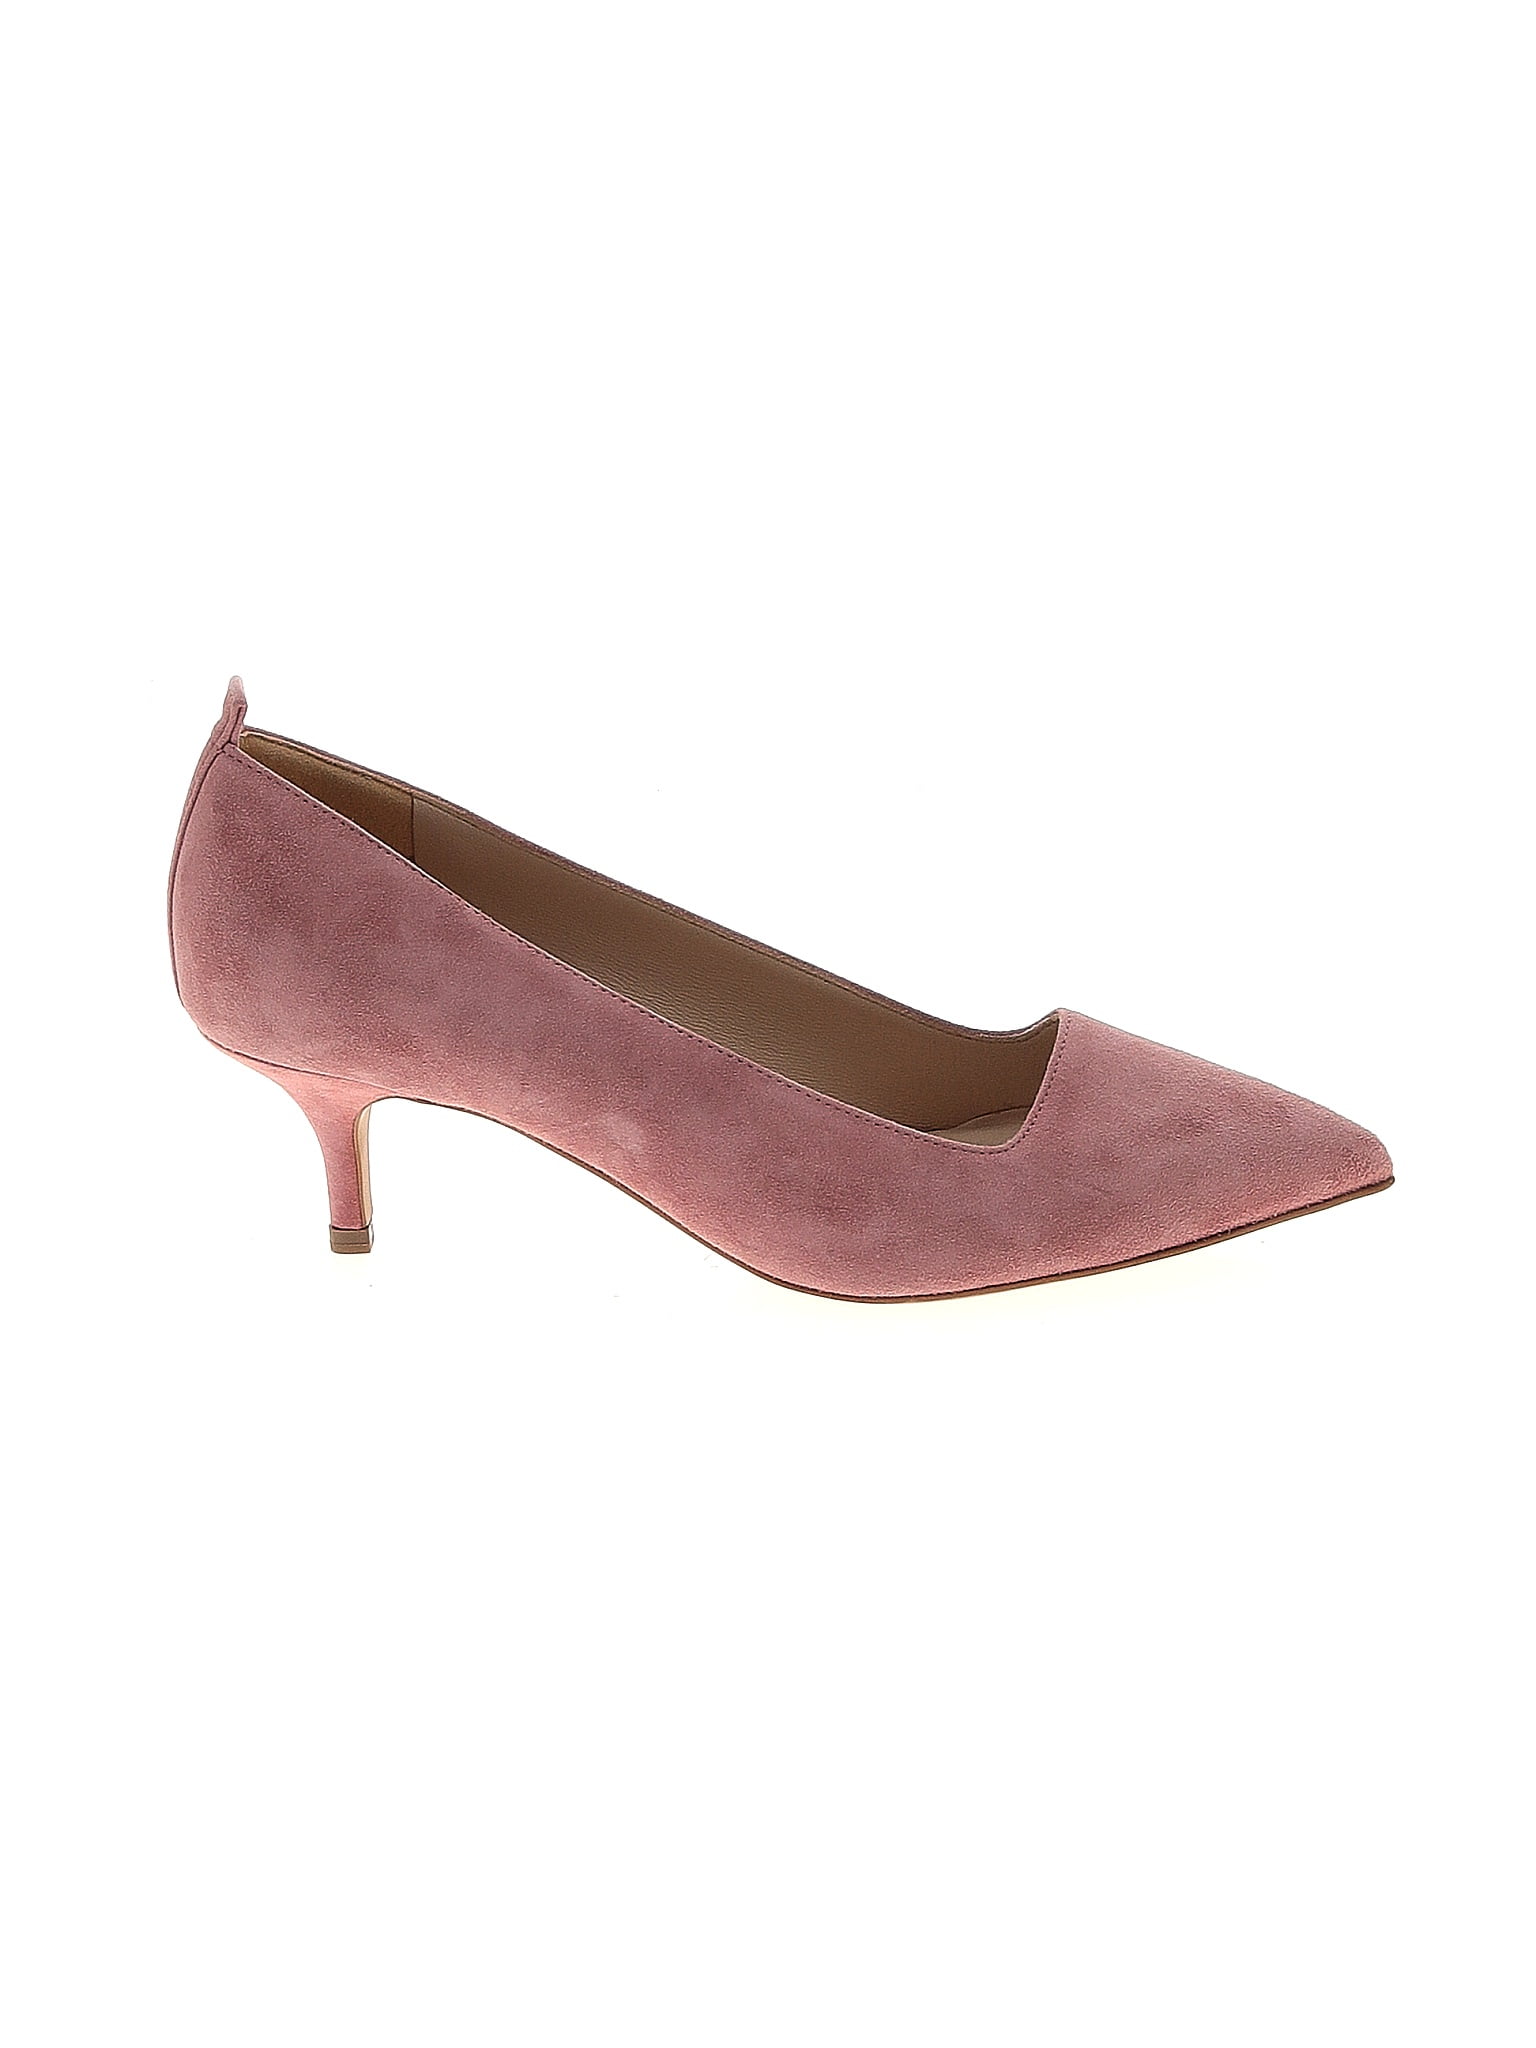 Everlane Solid Blush Pink Heels Size 5 1/2 - 58% off | thredUP